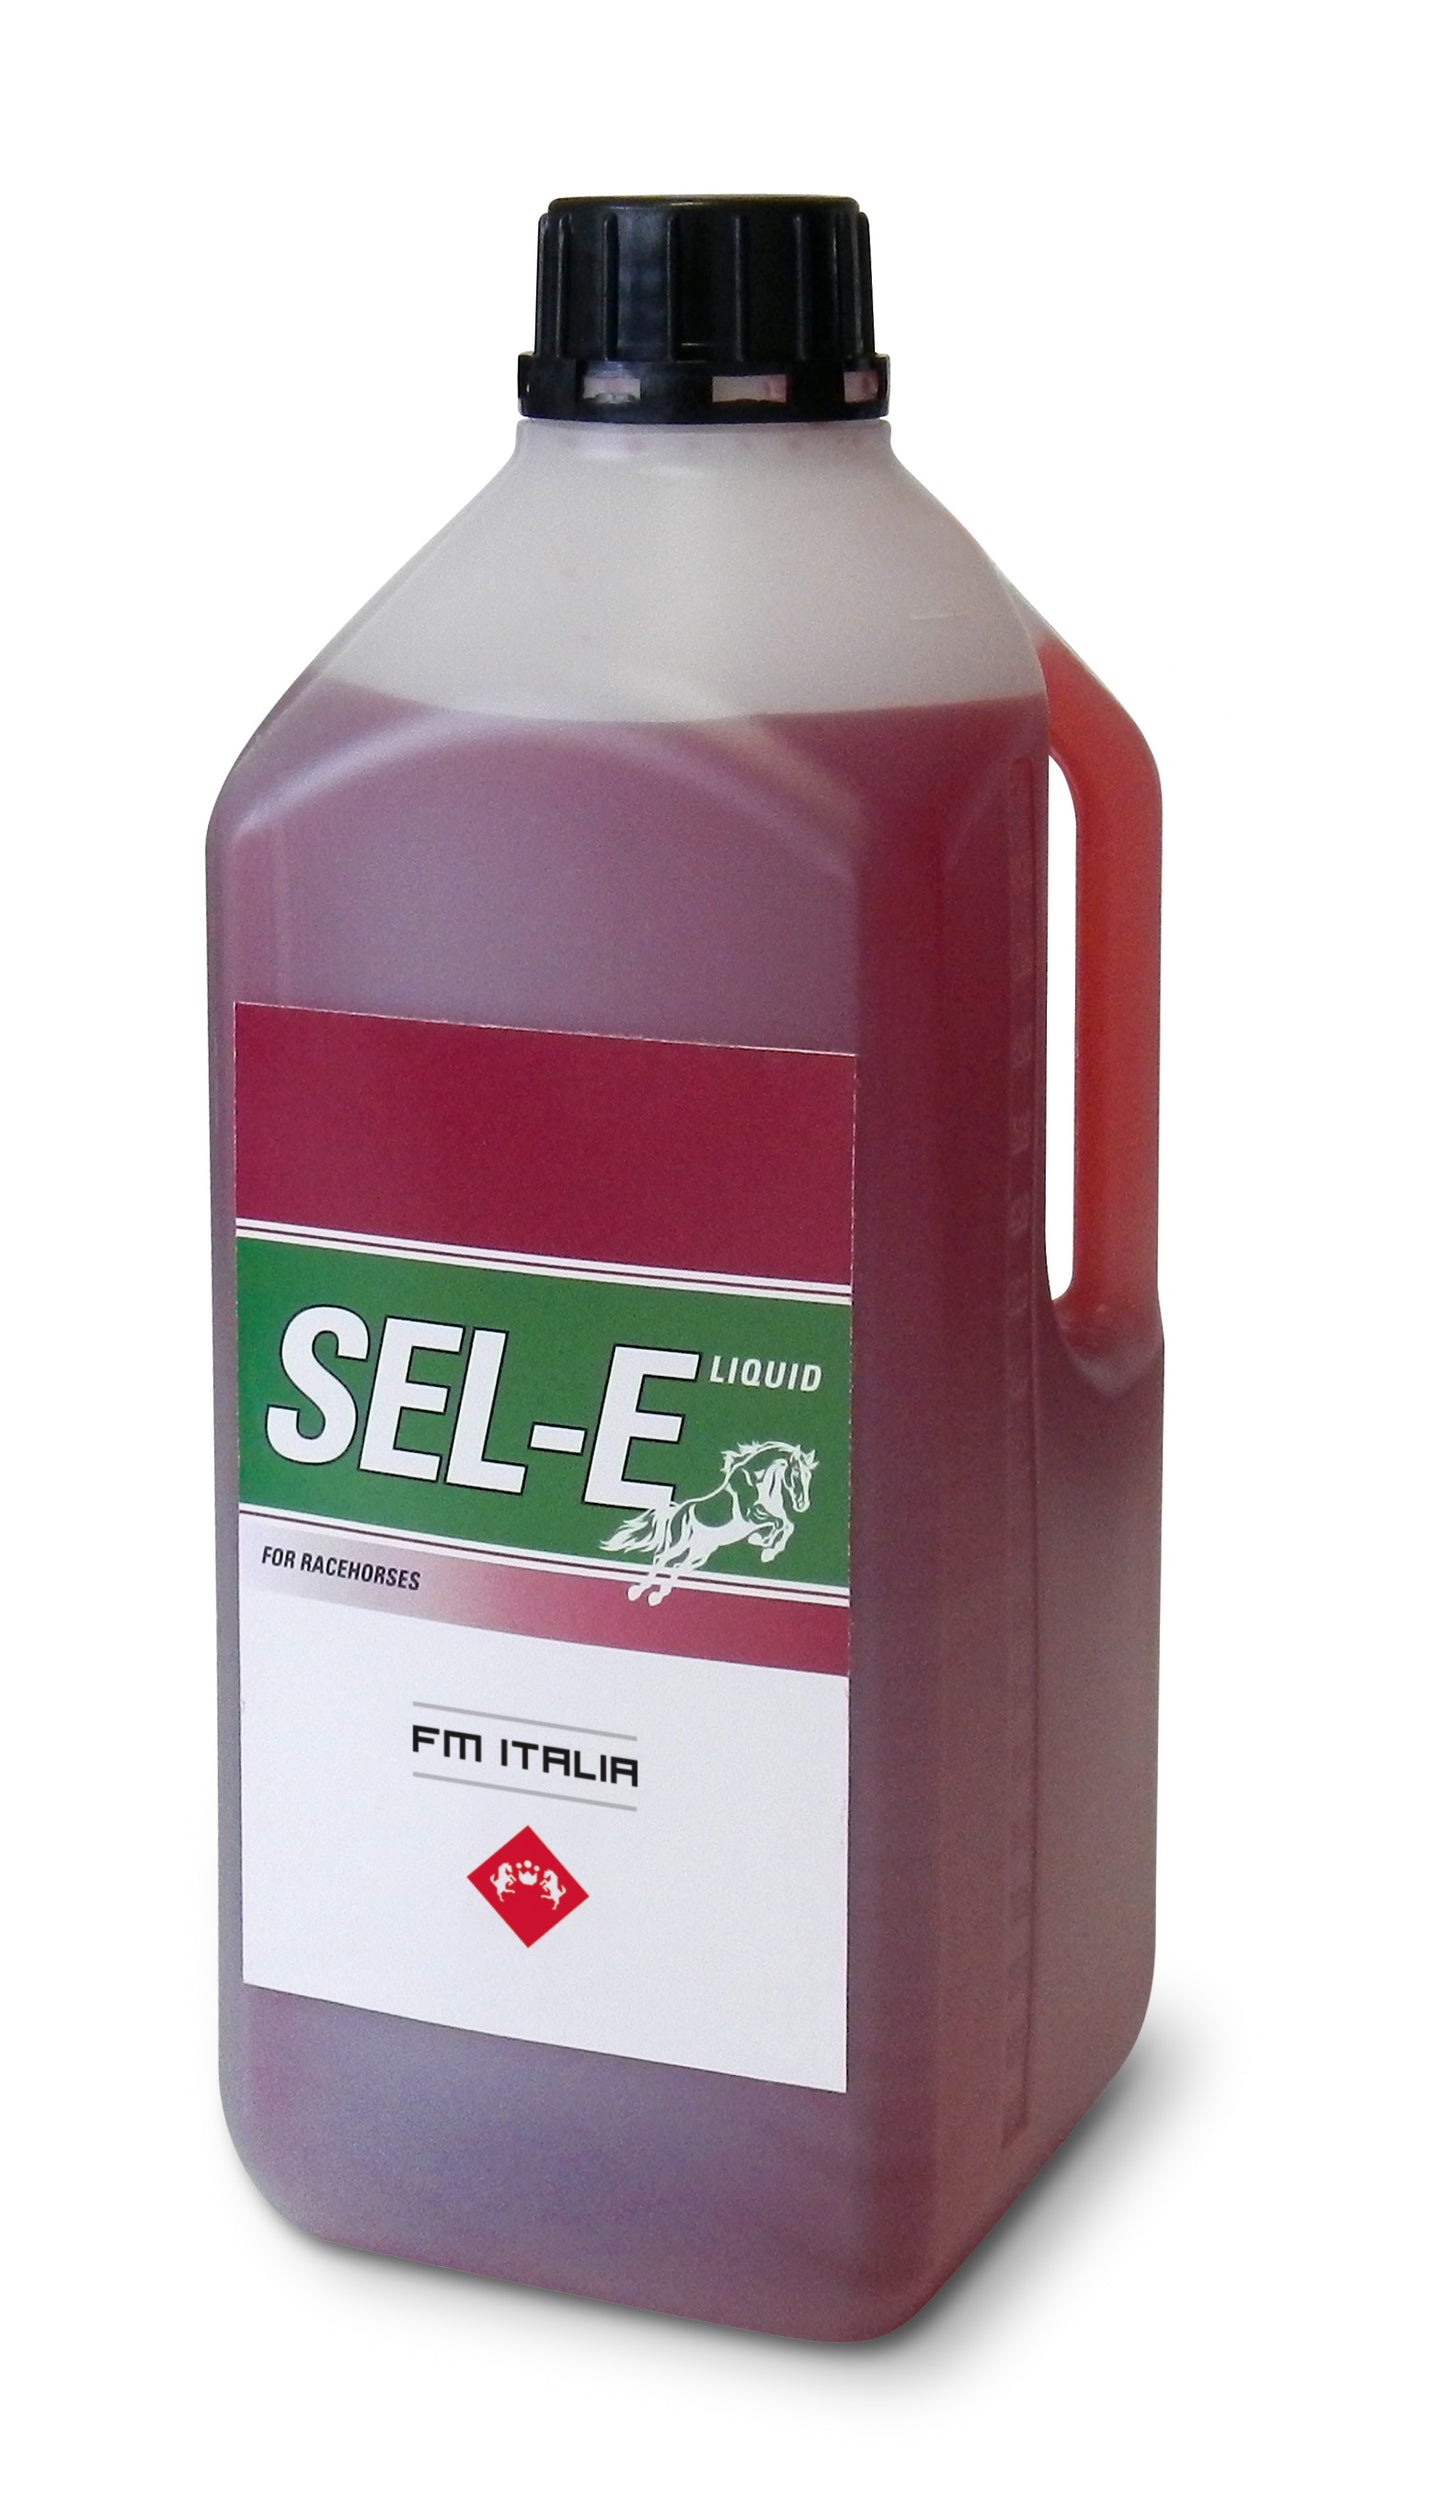 SEL-E LIQUID | Sports Preparation and Recovery Liquid for Horses